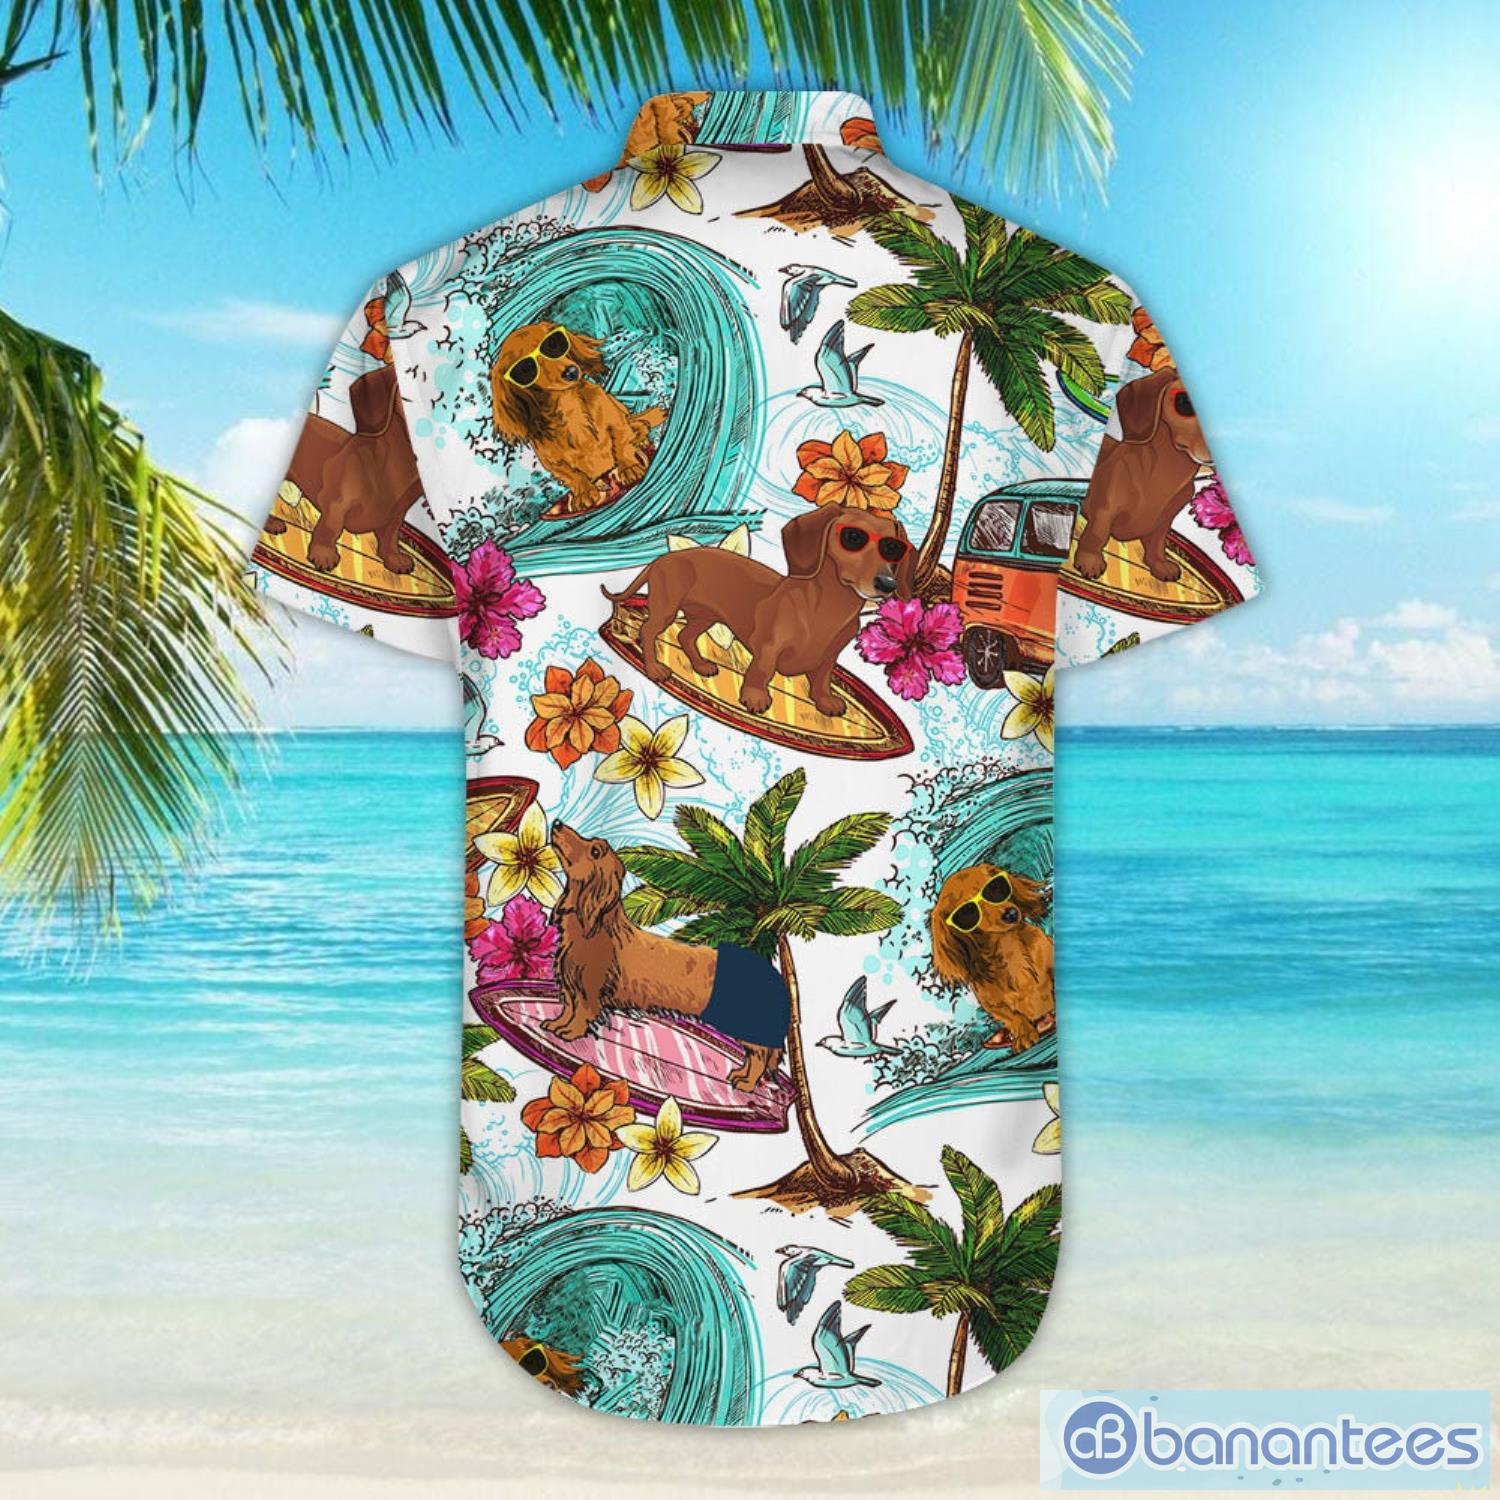 Funny Dachshund Shirts Funny Dachshund Wearing Glasses Hawaiian Shirt And Shorts Dachshund Gift - Funny Dachshund Shirts - Funny Dachshund Wearing Glasses Hawaii Shirt - Dachshund Gift_5